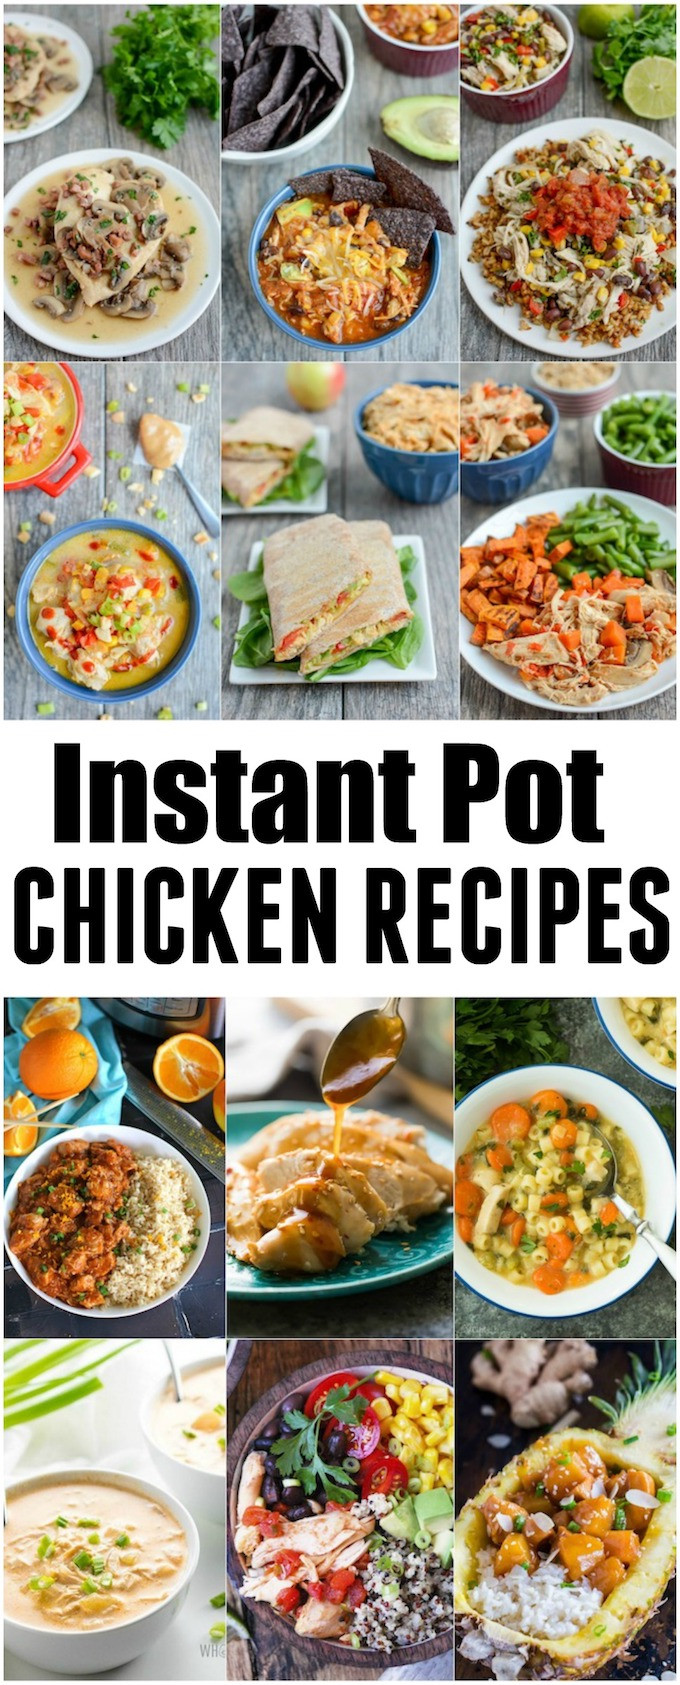 Healthy Instant Pot Chicken Recipes
 Instant Pot Chicken Recipes